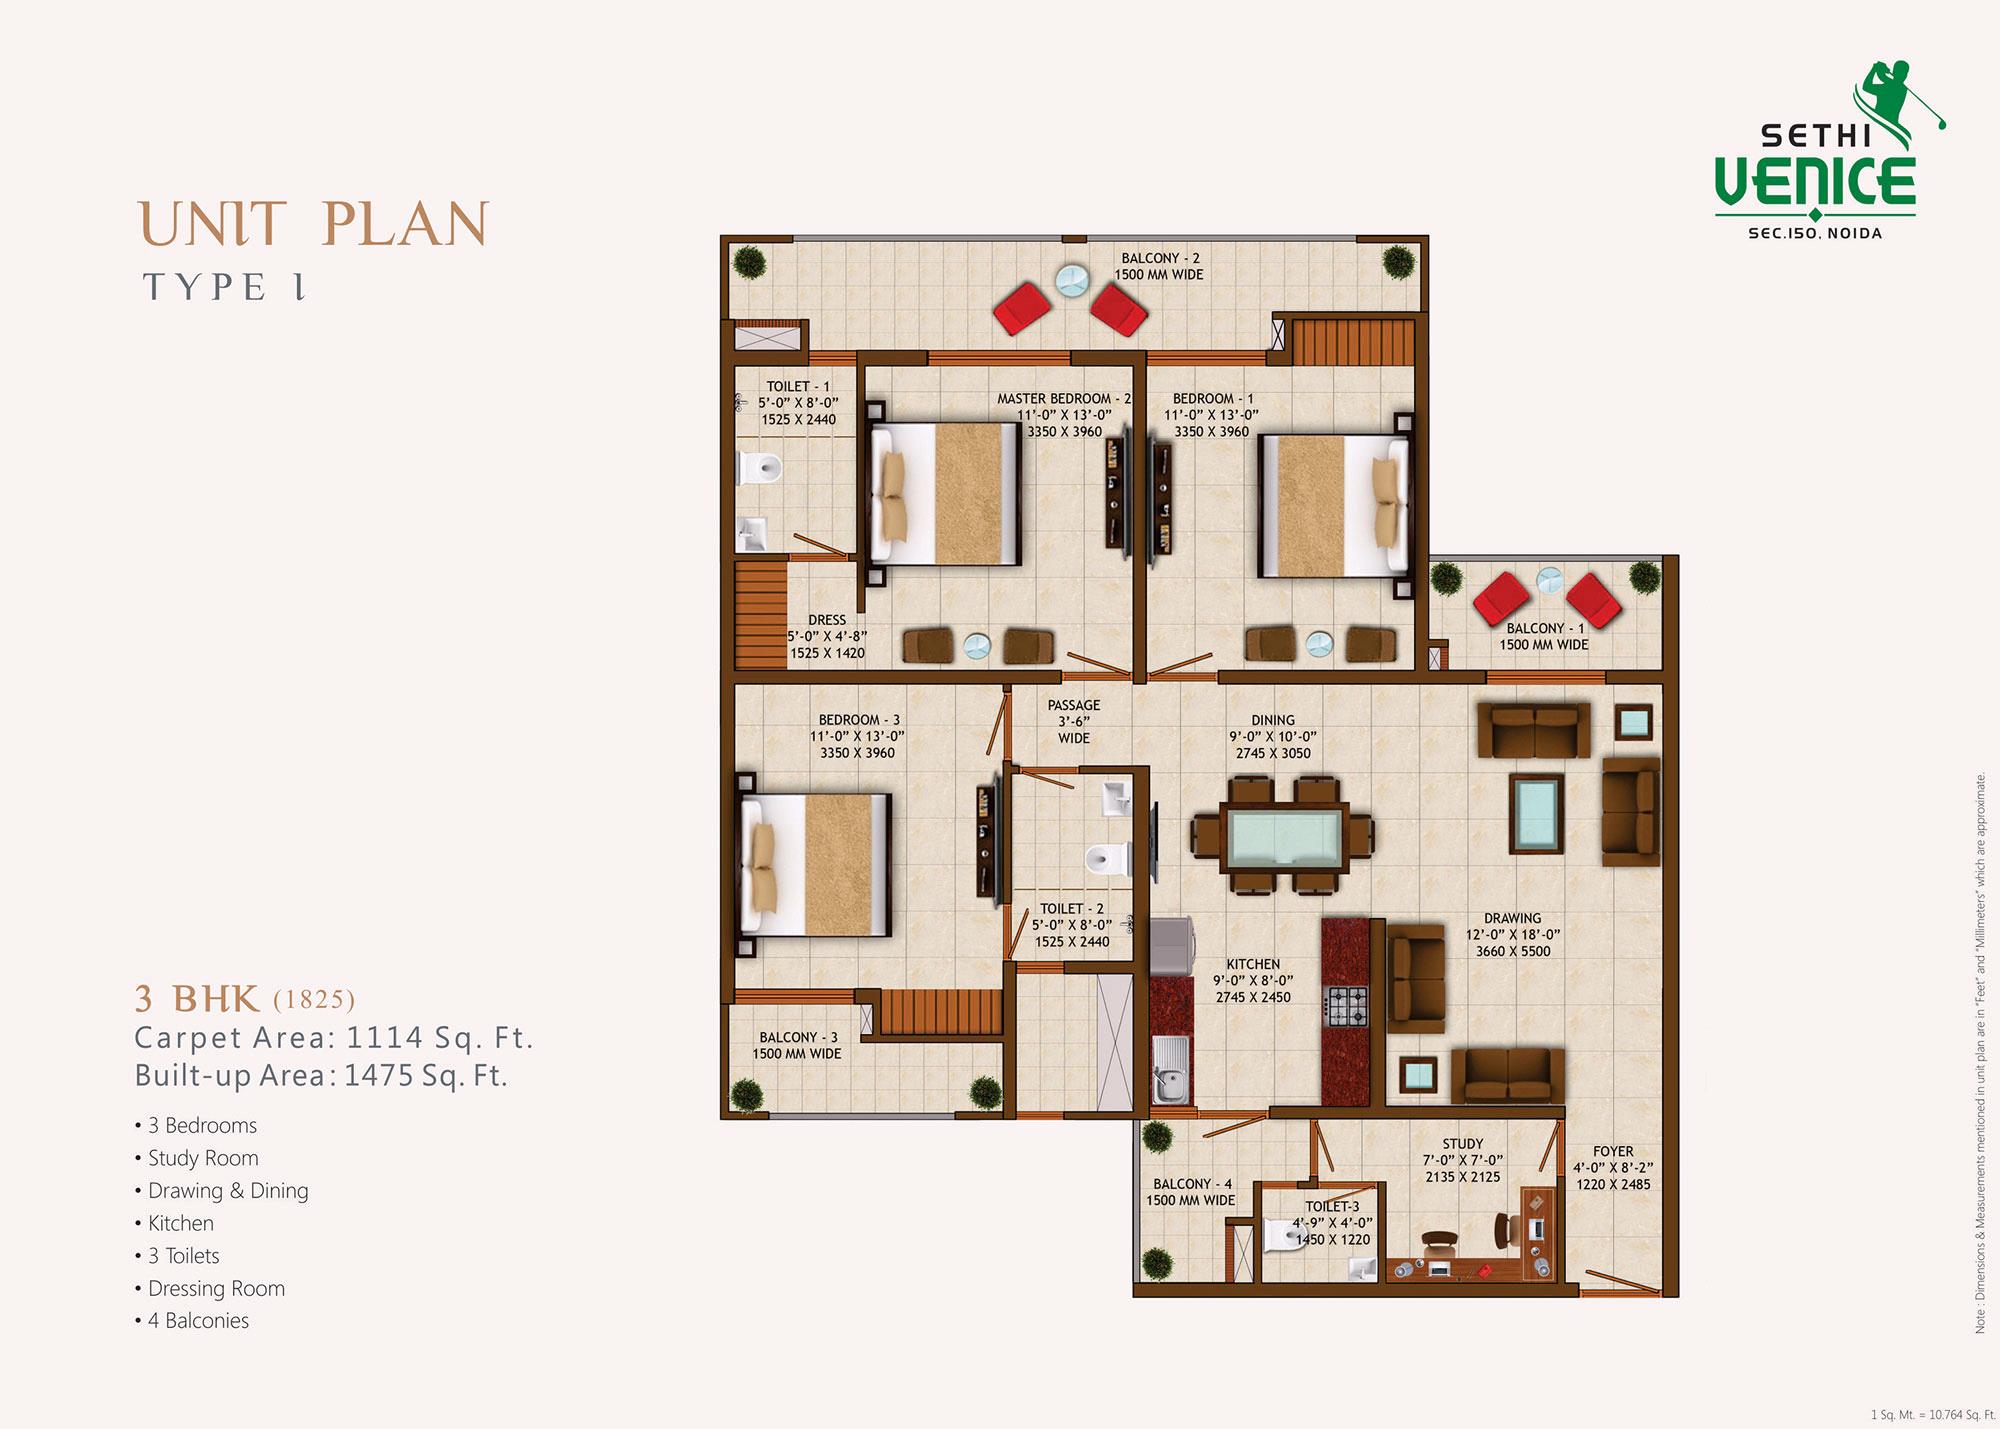 Sethi Venice Floor Plan